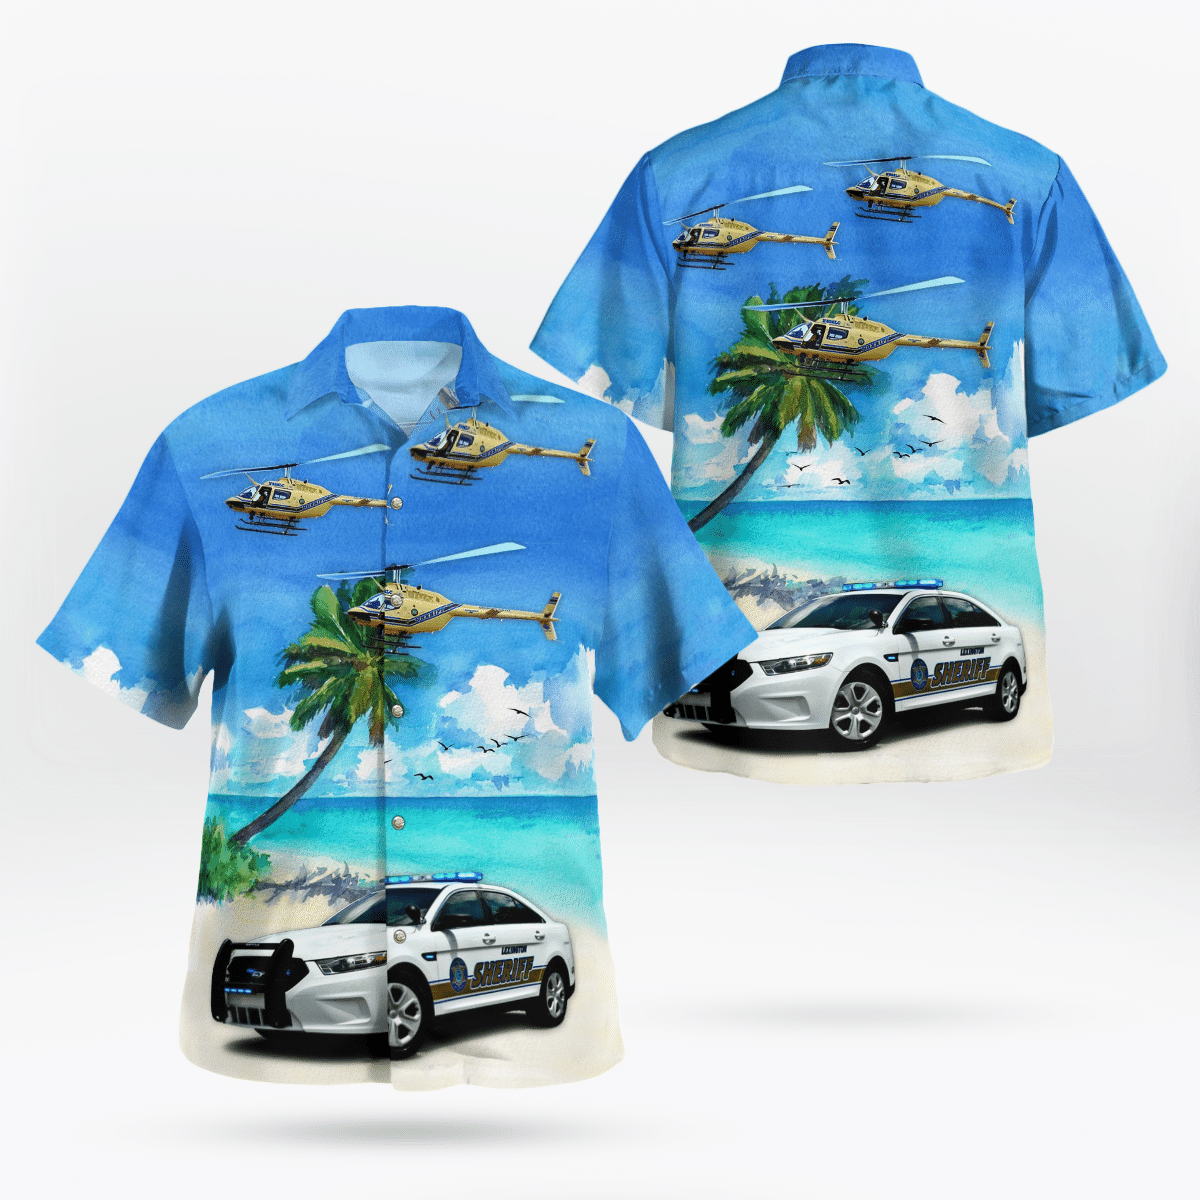 Summer so cool with top new hawaiian shirt below 267